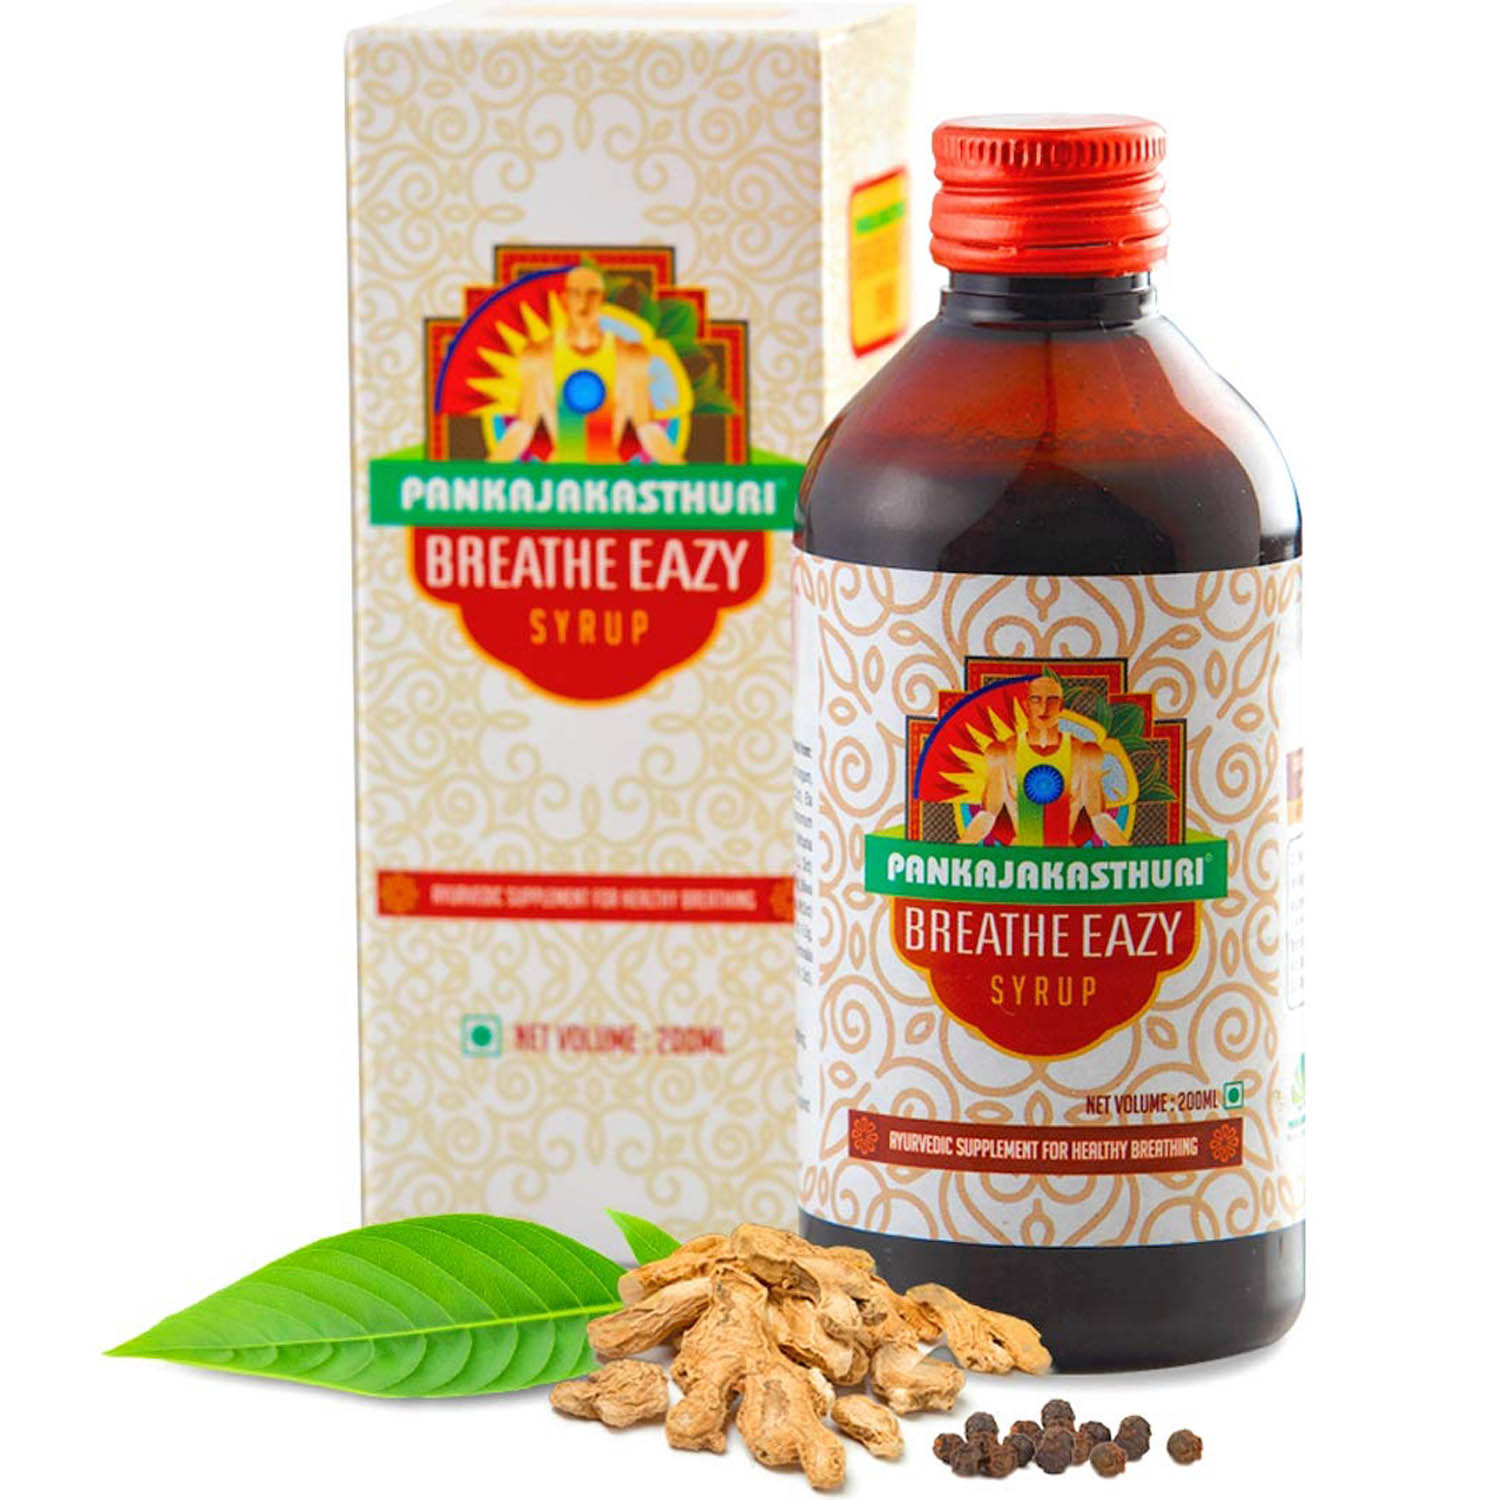 Pankajakasthuri Breathe Easy Syrup, 200 ml, Pack of 1 